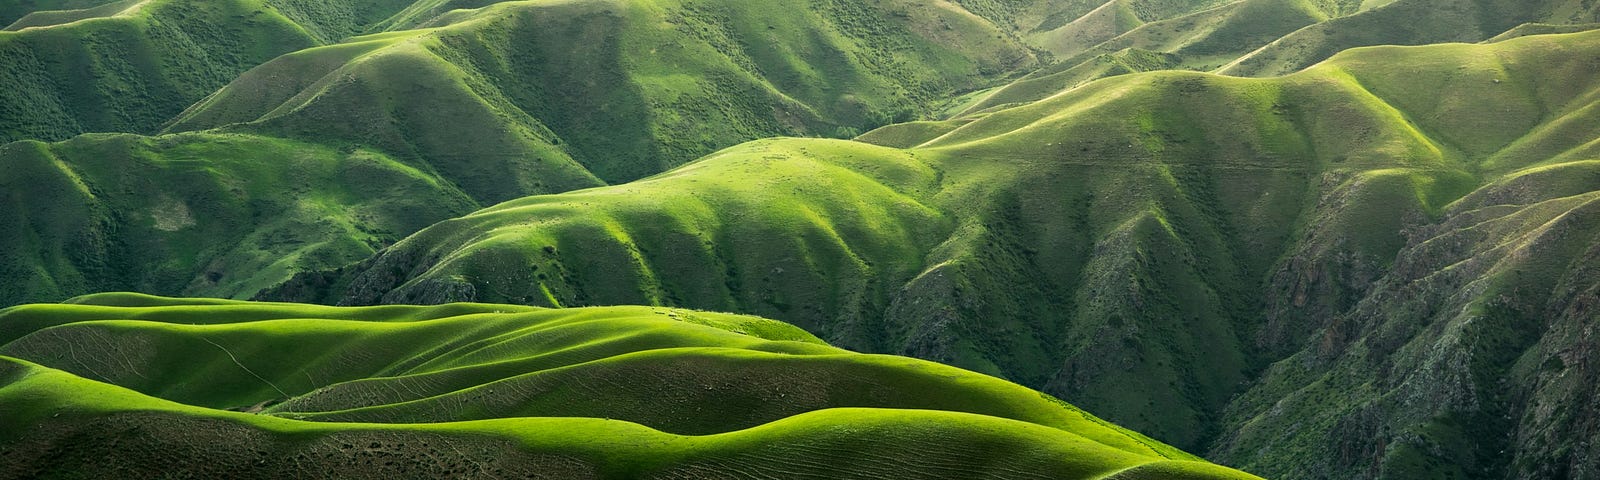 Green mountainous landscape